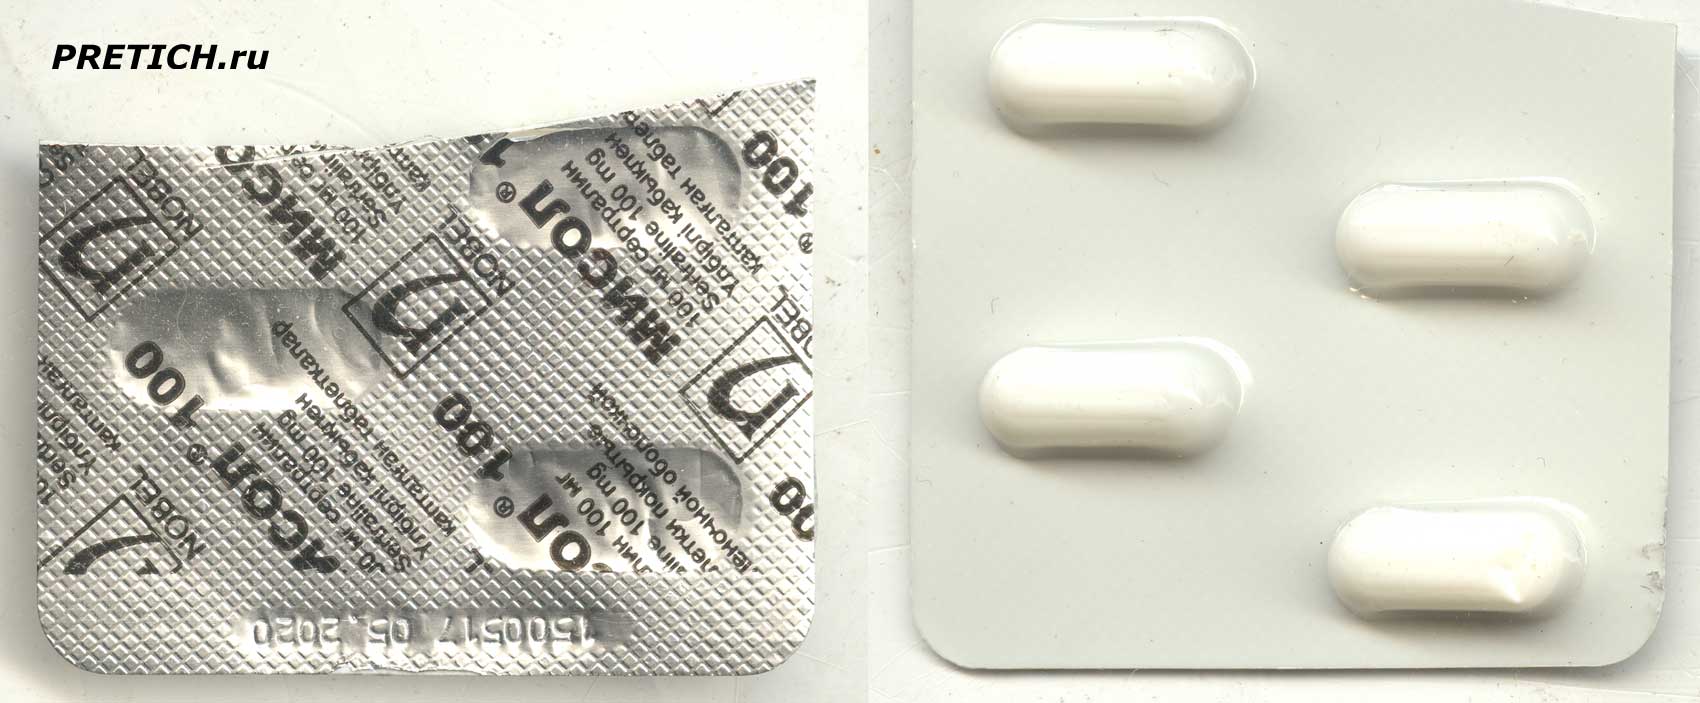 misol-100-antidepress-1000-hgfvgf-0002.jpg